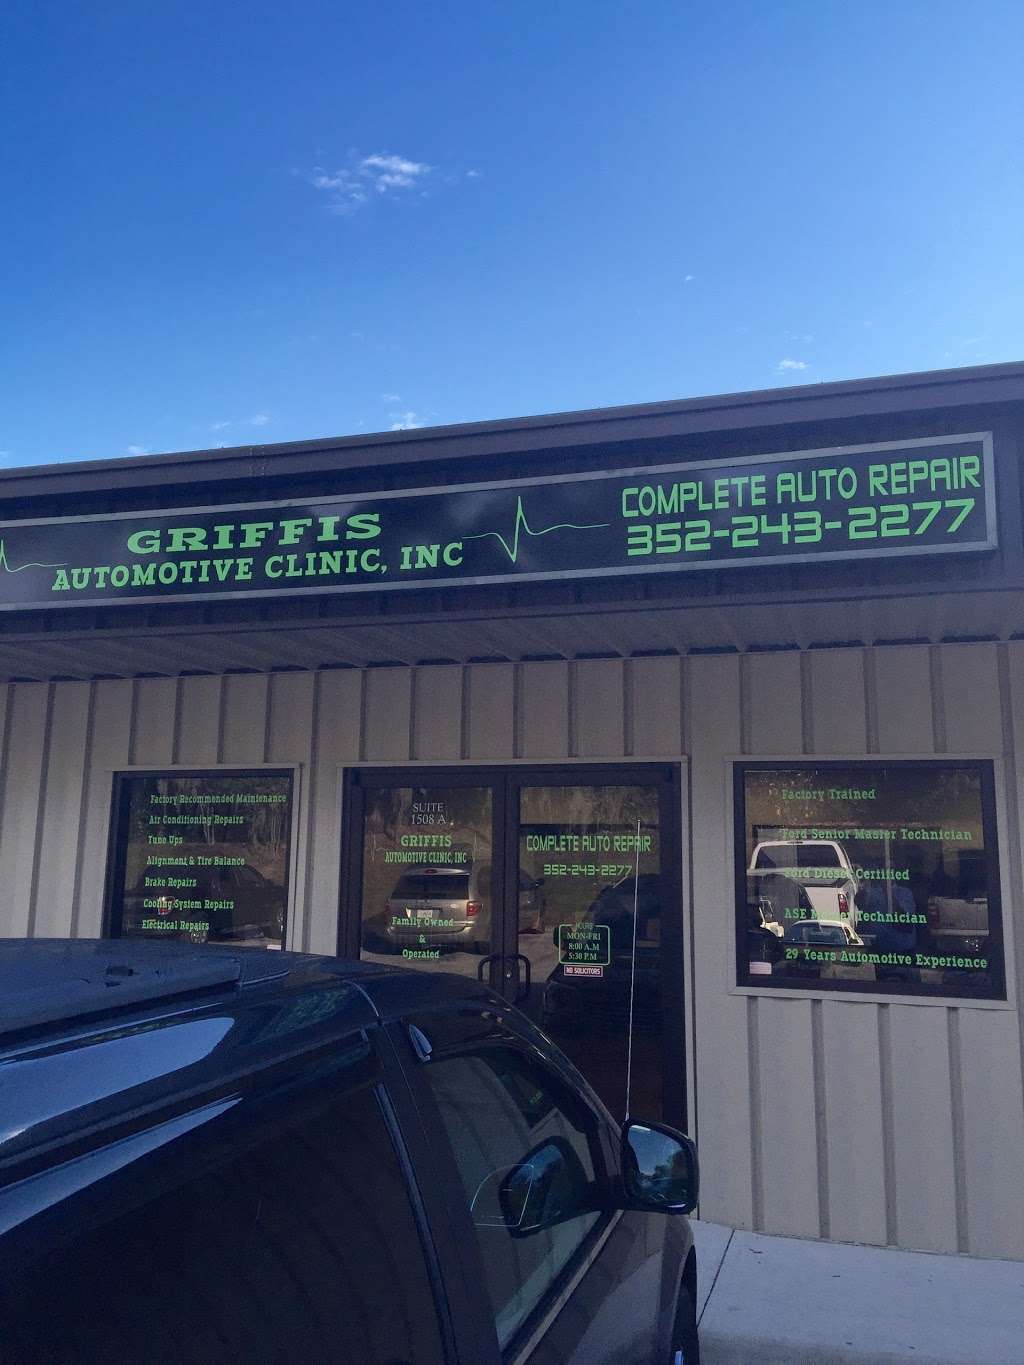 Griffis Automotive Clinic, Inc. | 1508 A Max Hooks Rd, Groveland, FL 34736, USA | Phone: (352) 243-2277